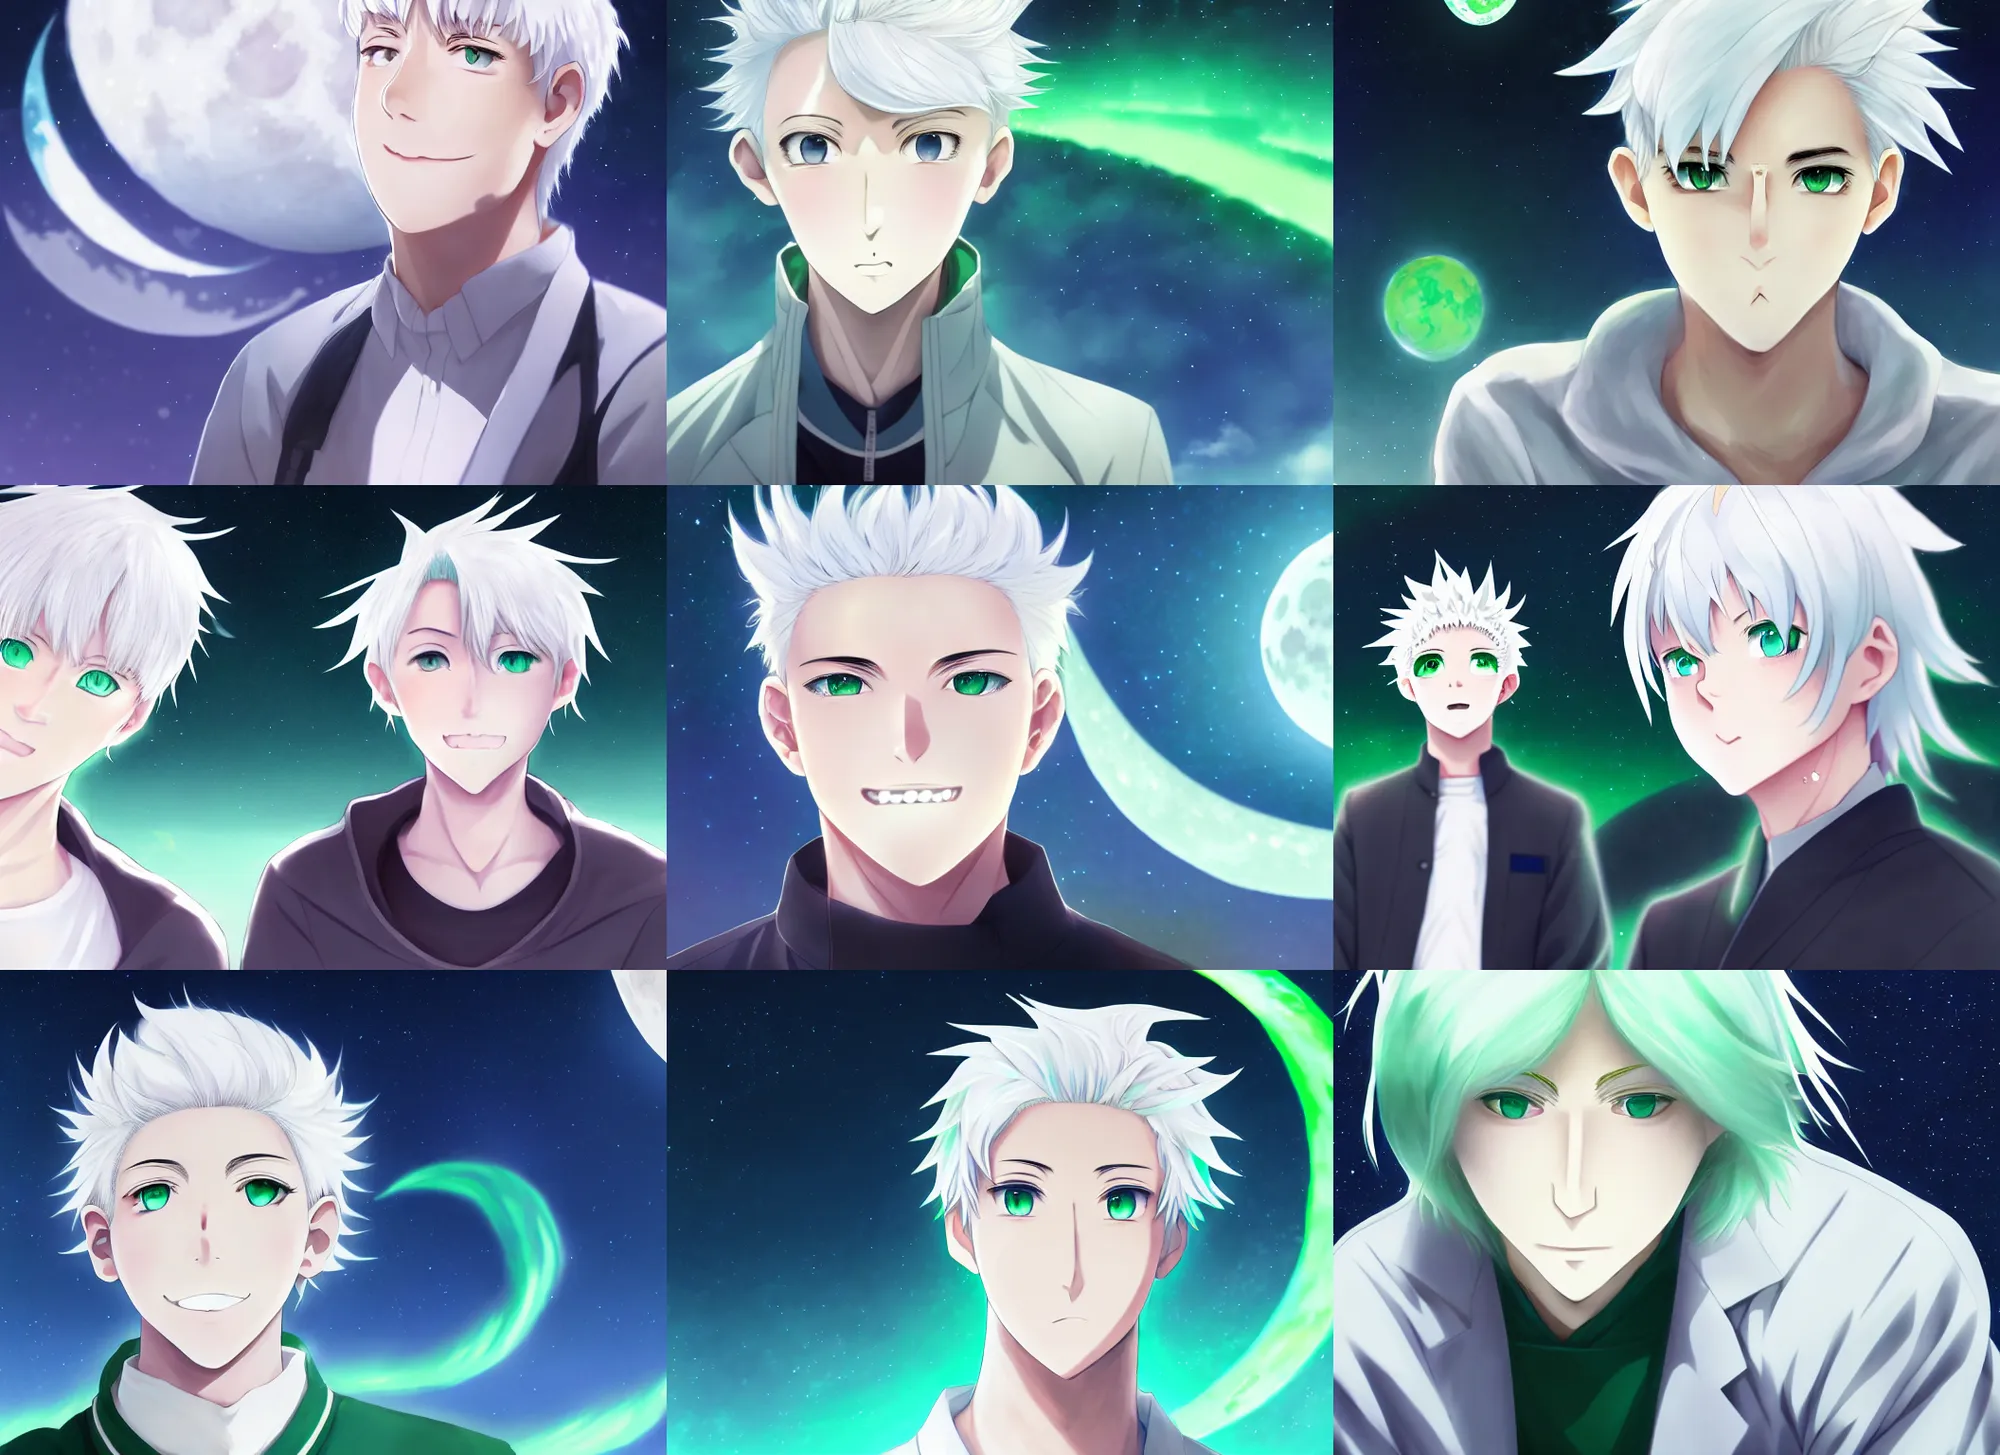 Prompt: white haired young guy with green eyes on the moon, aurora, smiling, stunning anime portrait, symmetry, ecchi style, makoto shinkai, genshin impact, art, long shot, fisheye